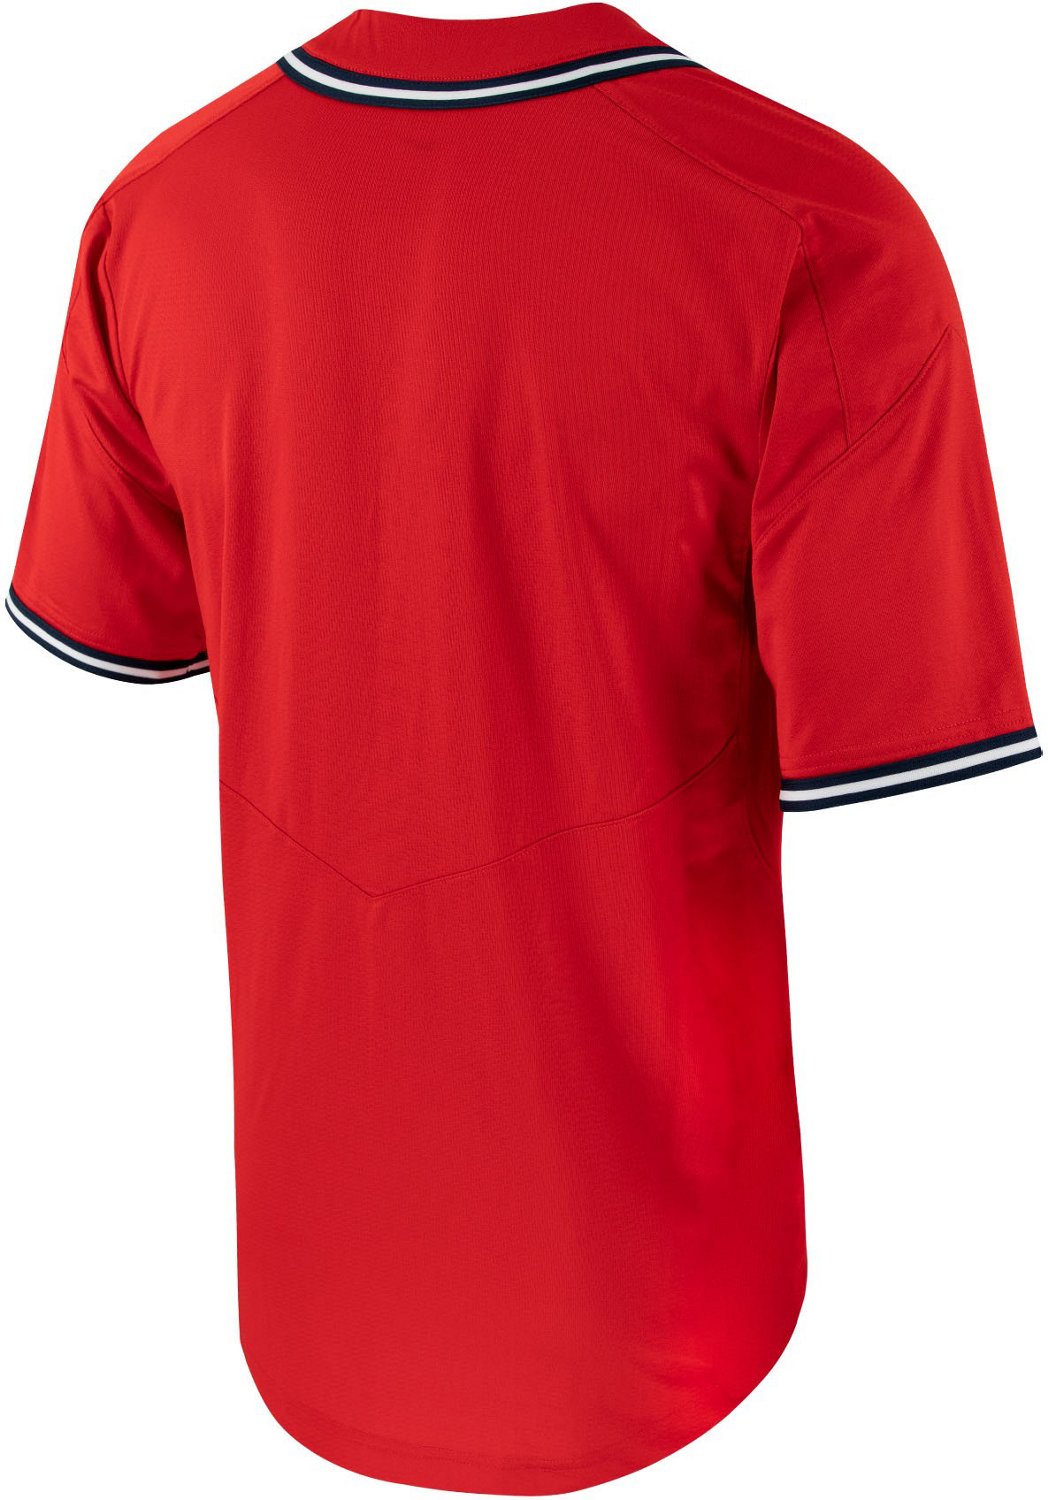 Arizona Men's Nike College Full-Button Baseball Jersey.